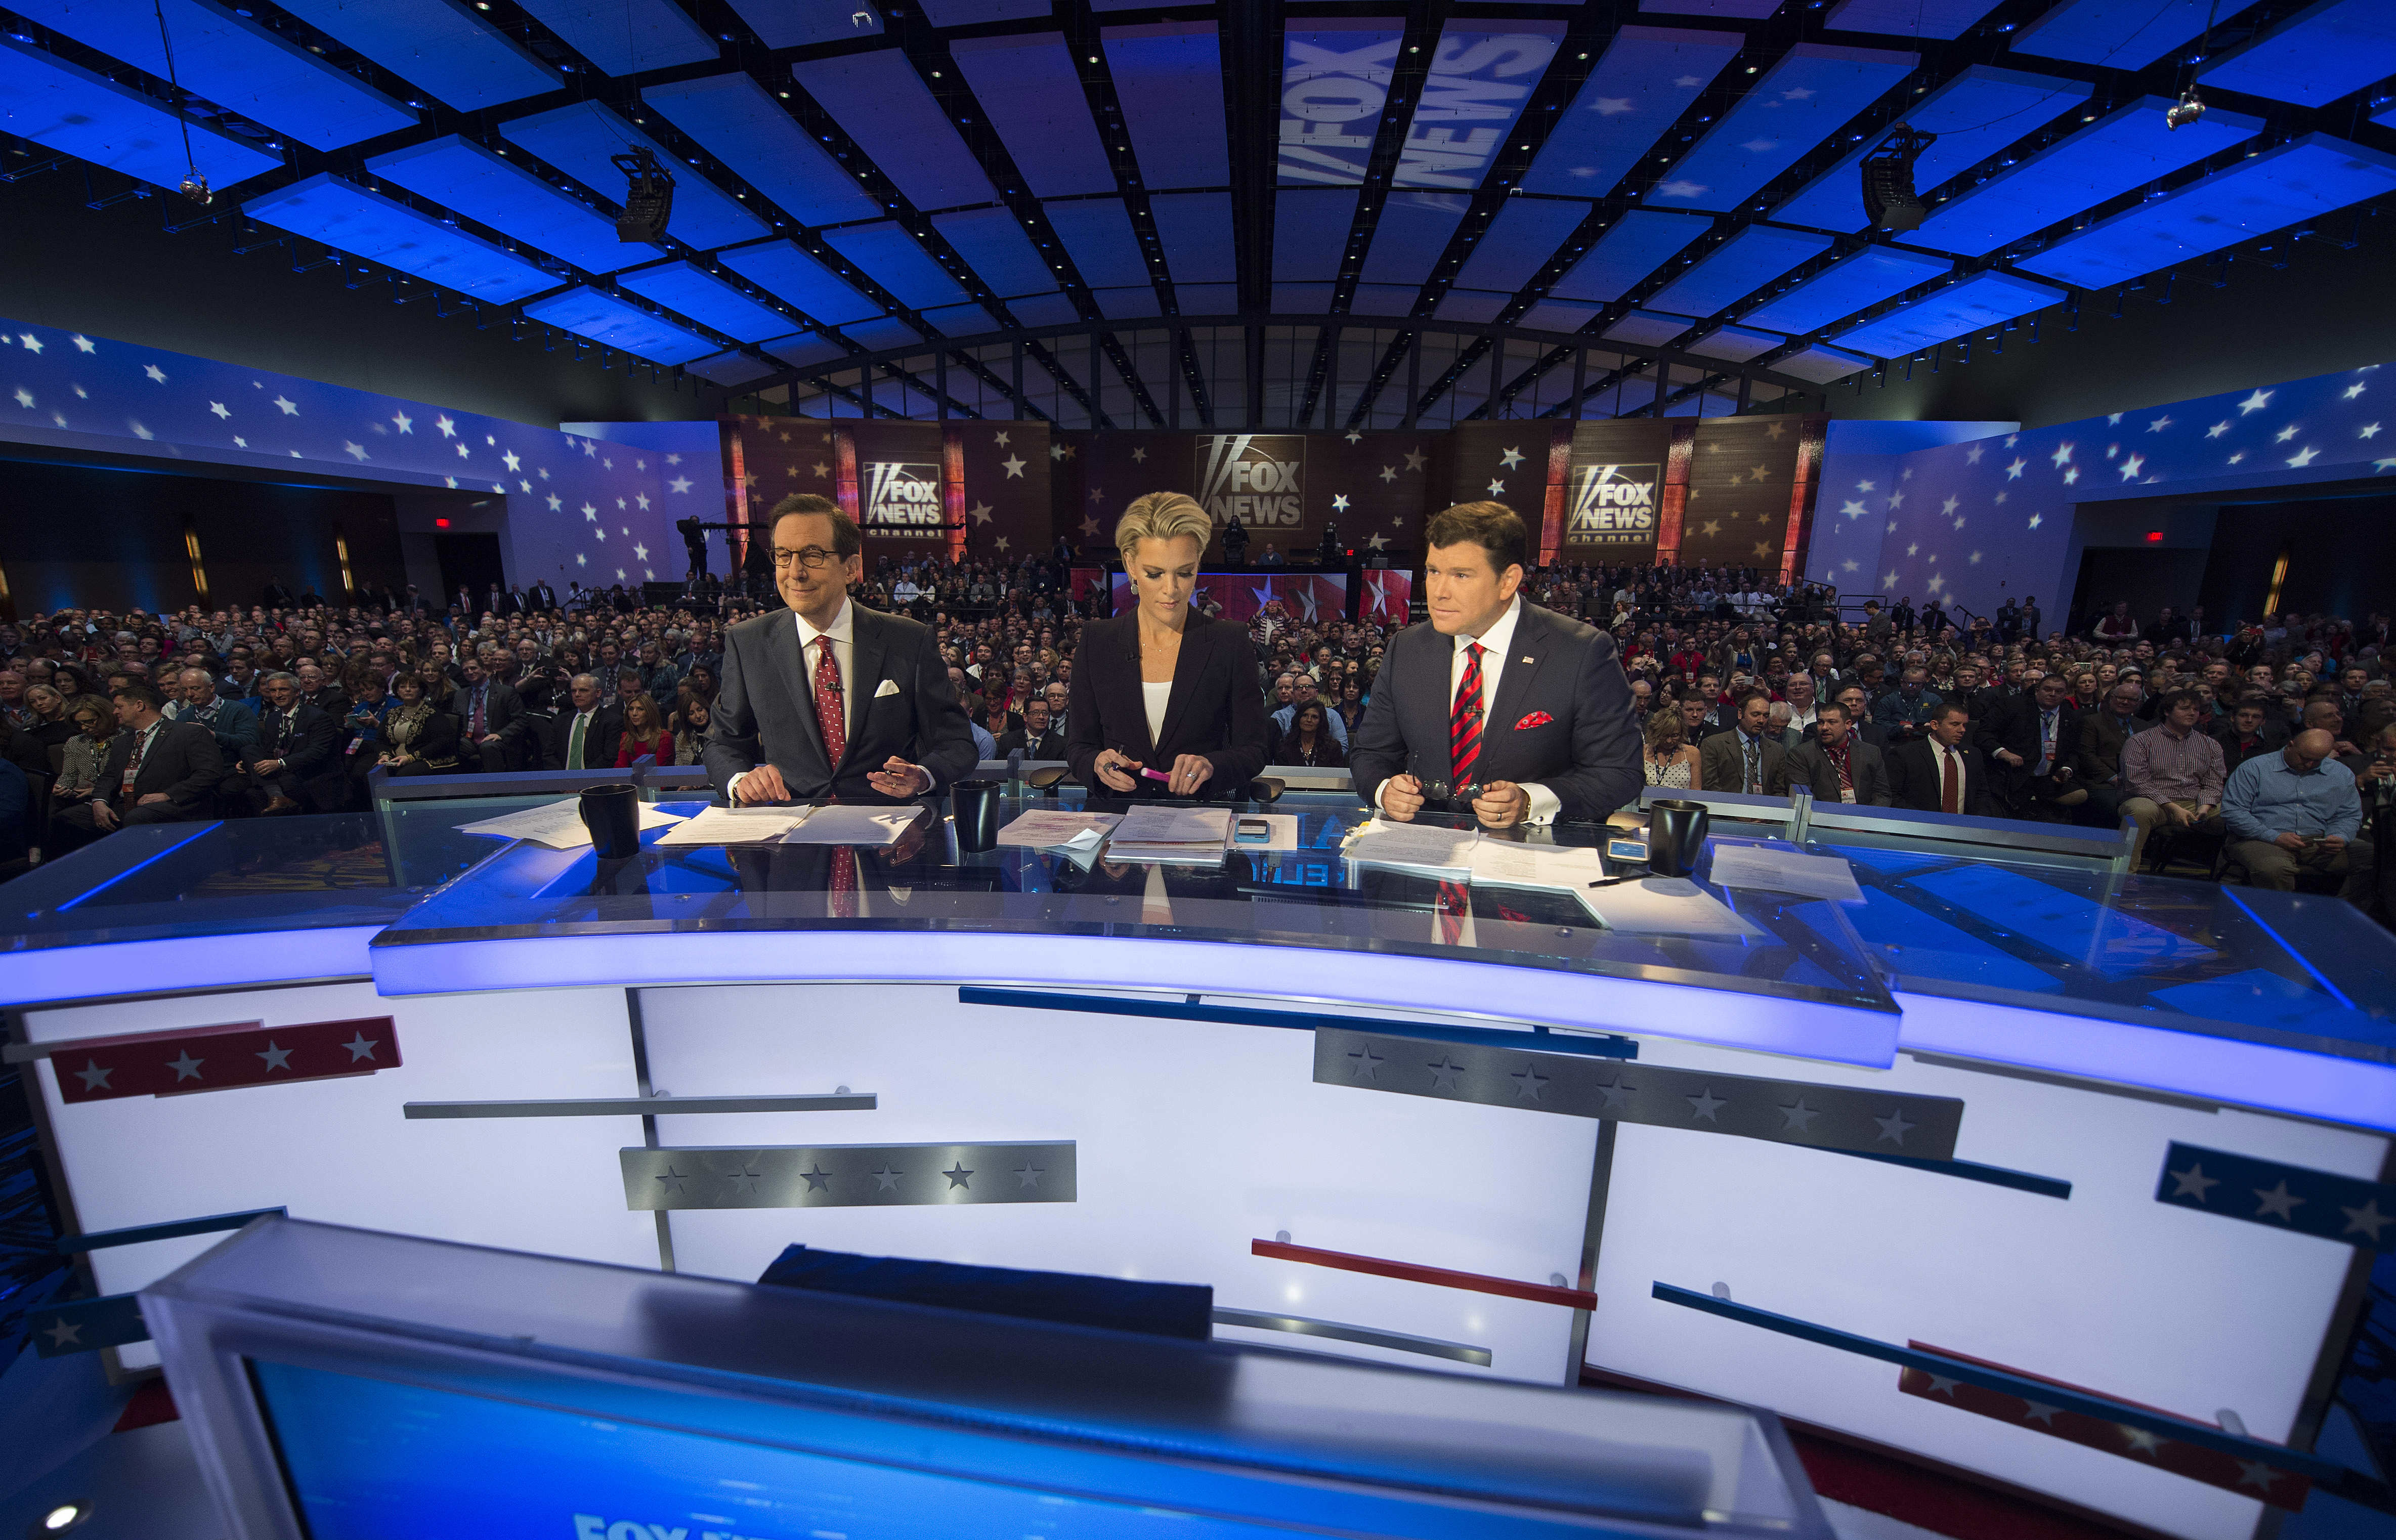 How to watch tonight's Republican debate CBS News